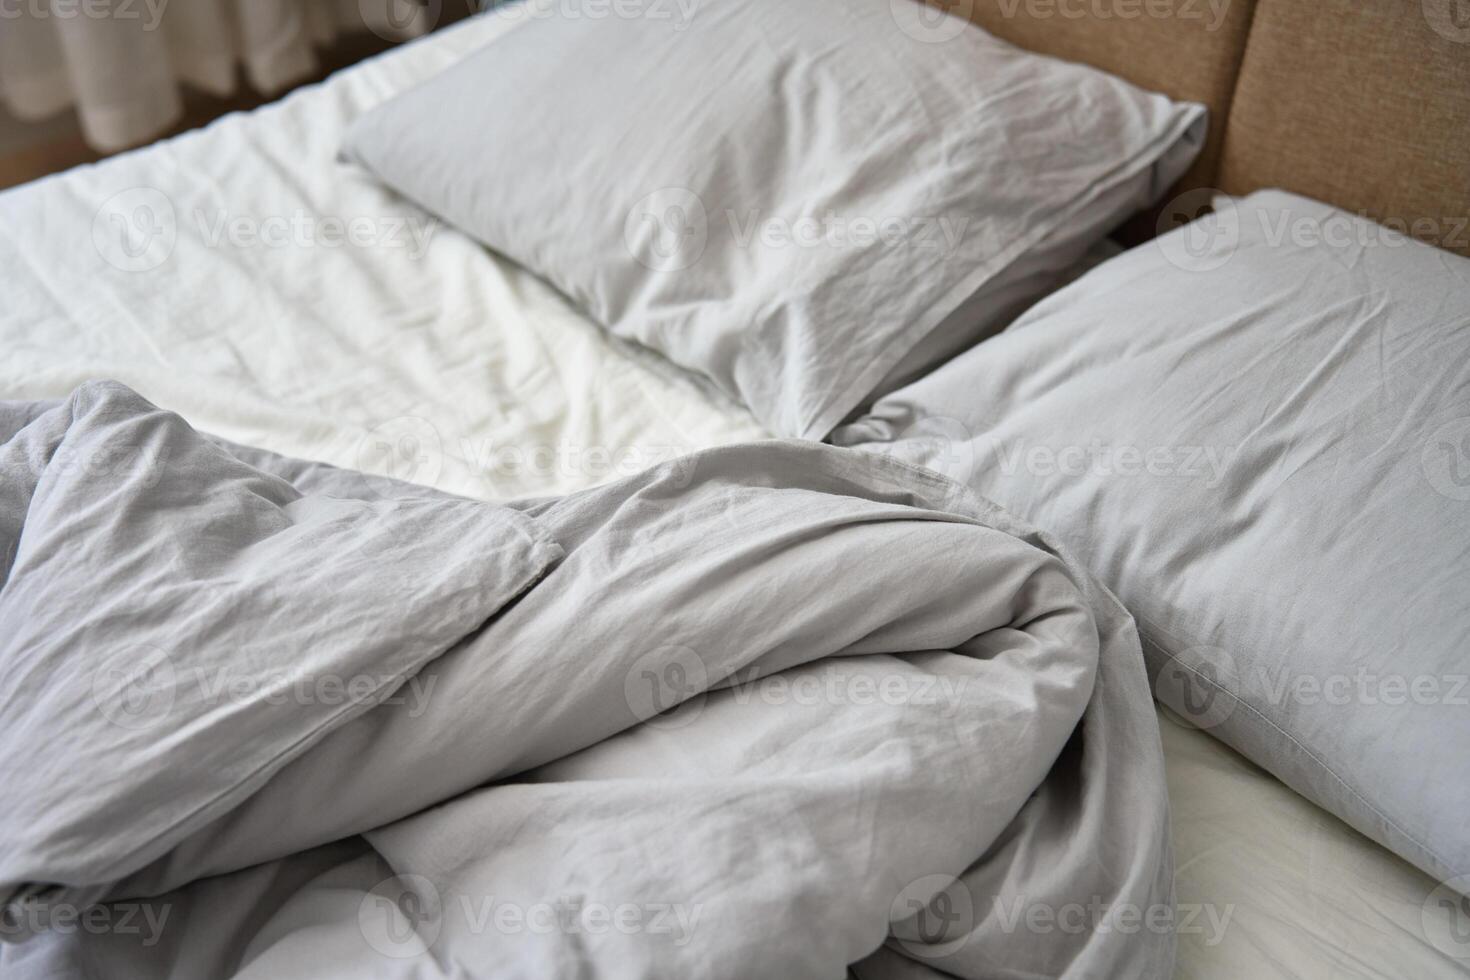 verfrommeld bed met kussens, deken en verfrommeld lakens in slaapkamer foto